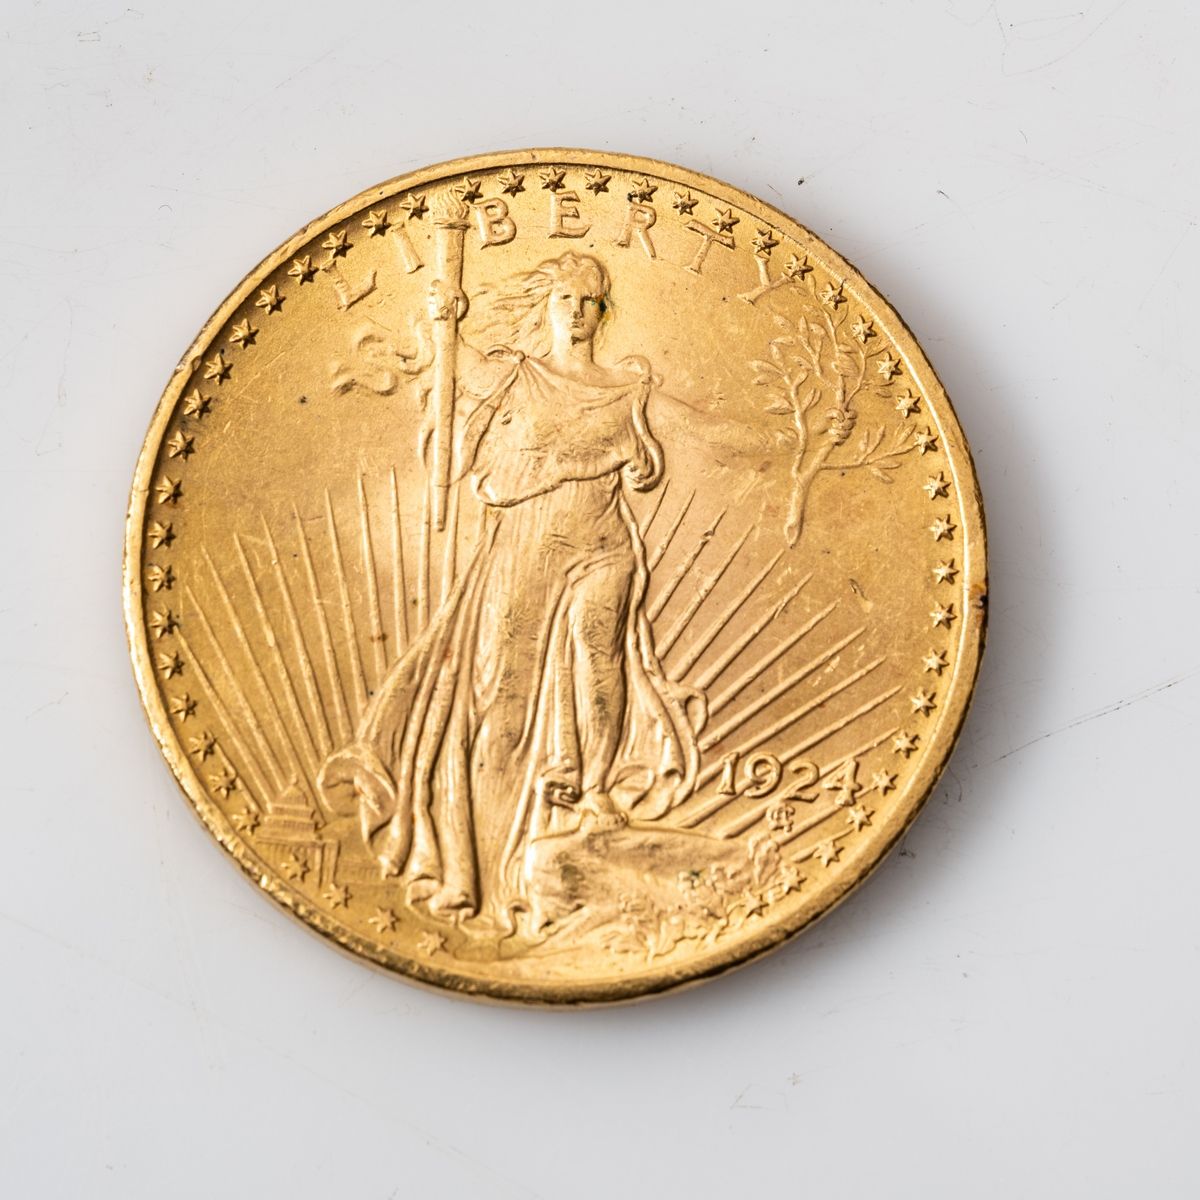 Null Moneta d'oro da 20 dollari "Saint-Gaudens - Double Eagle" con motto - 1924
&hellip;